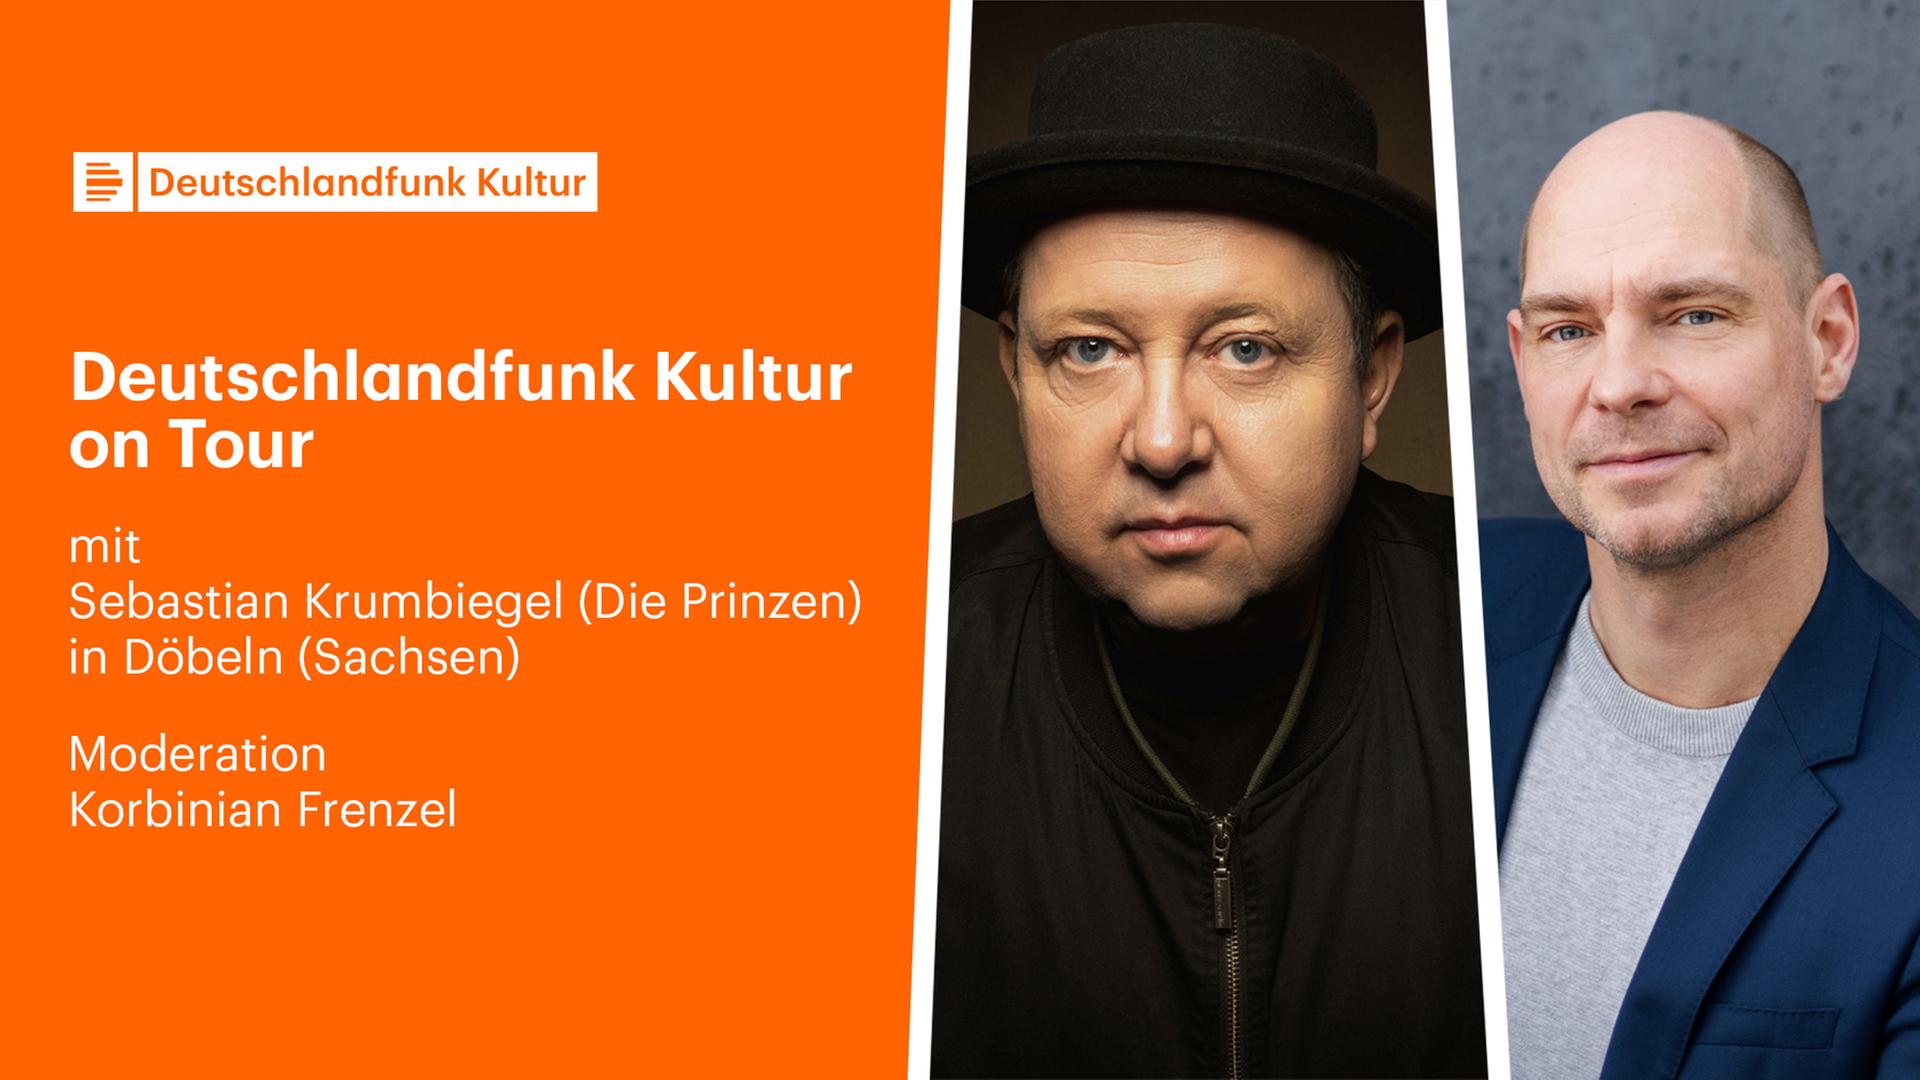 Deutschlandfunk Kultur on Tour mit Sebastian Krumbiegel in Döbeln. Moderation: Korbinian Frenzel. 